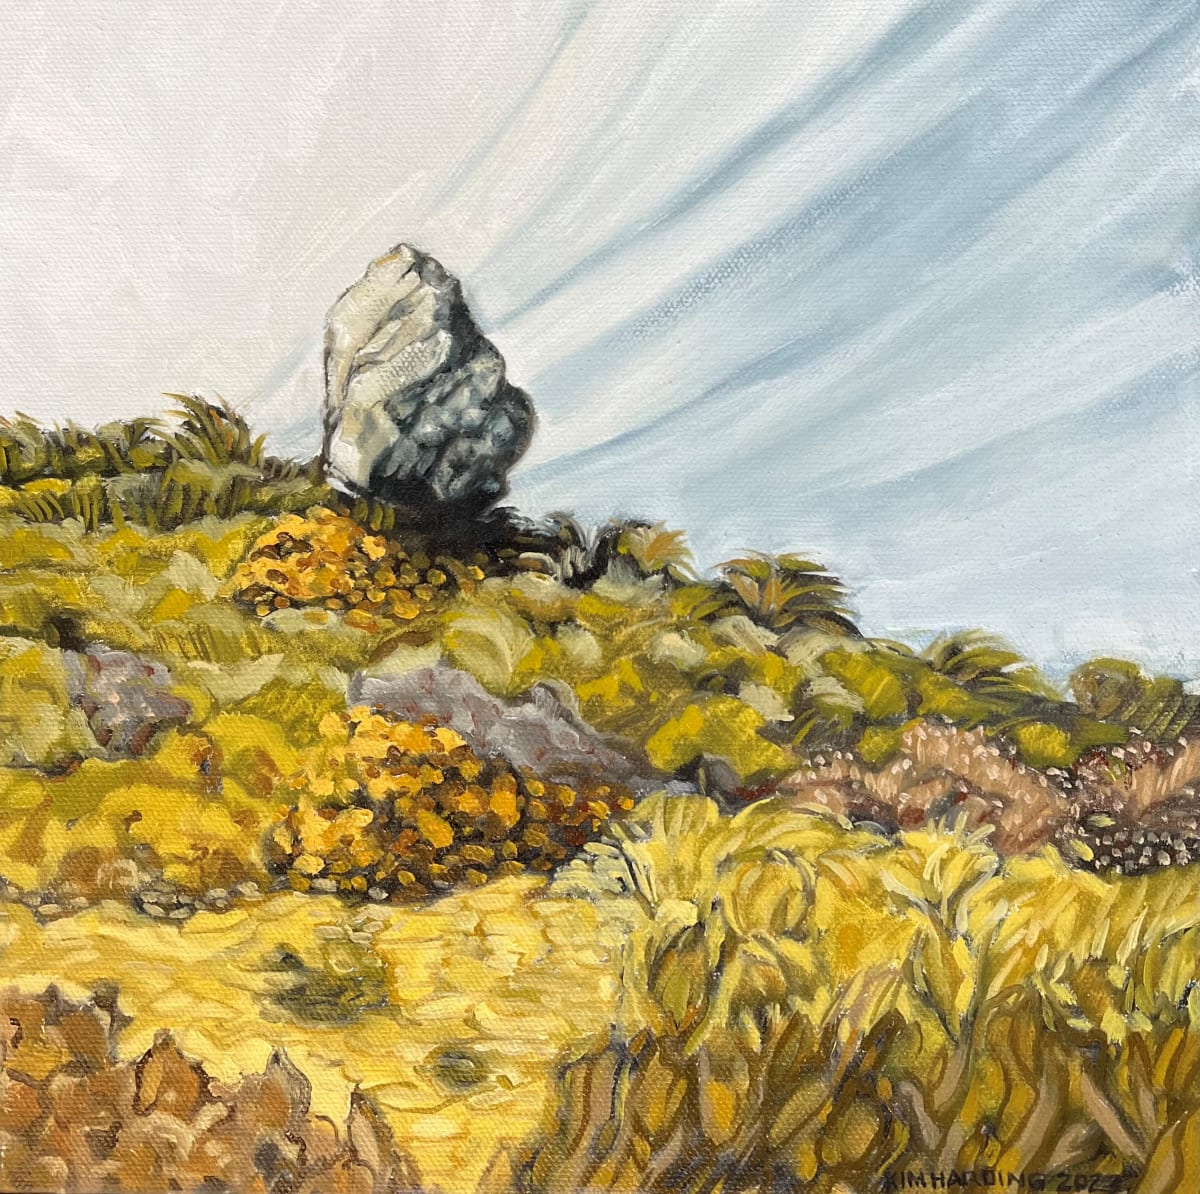 Hump Ridge Rock by Kim Harding  Image: "Hump Ridge Rock" Oil on Canvas 30 x 30cm 